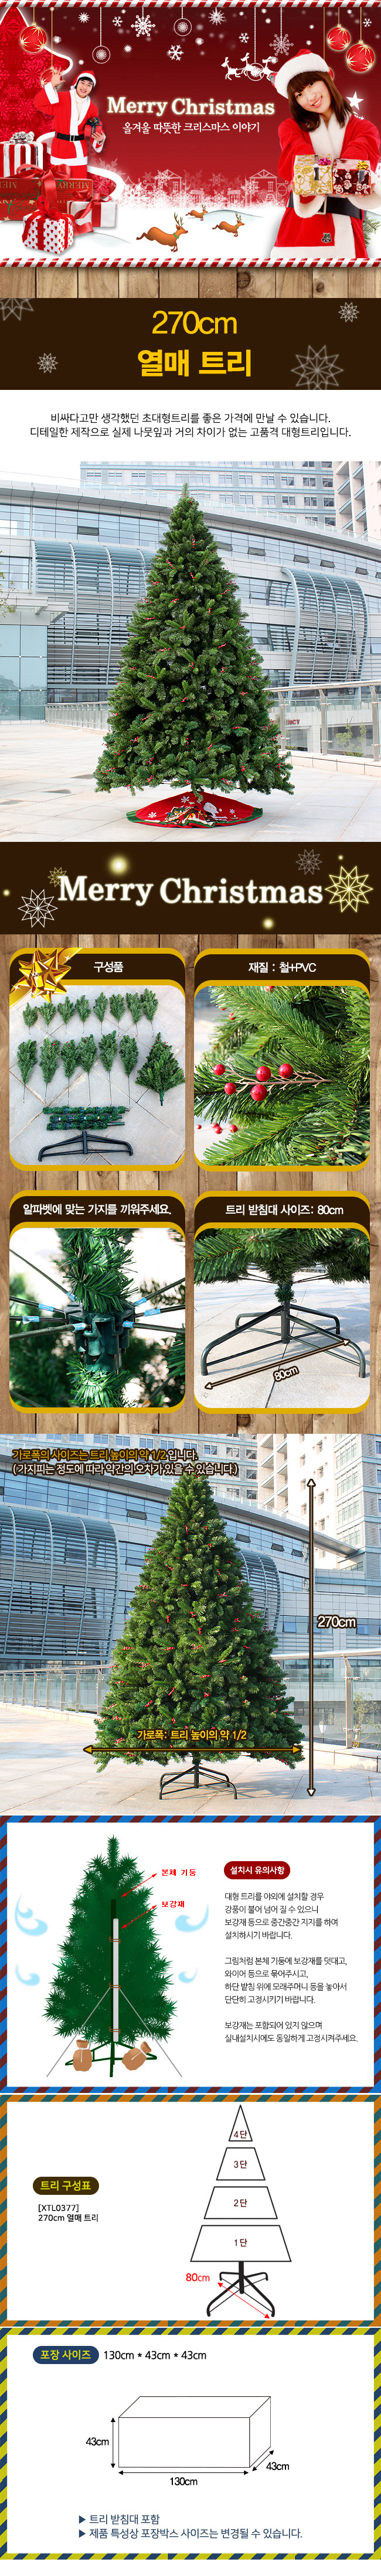 270cm 열매 대형 크리스마스 트리나무 /인테리어 장식